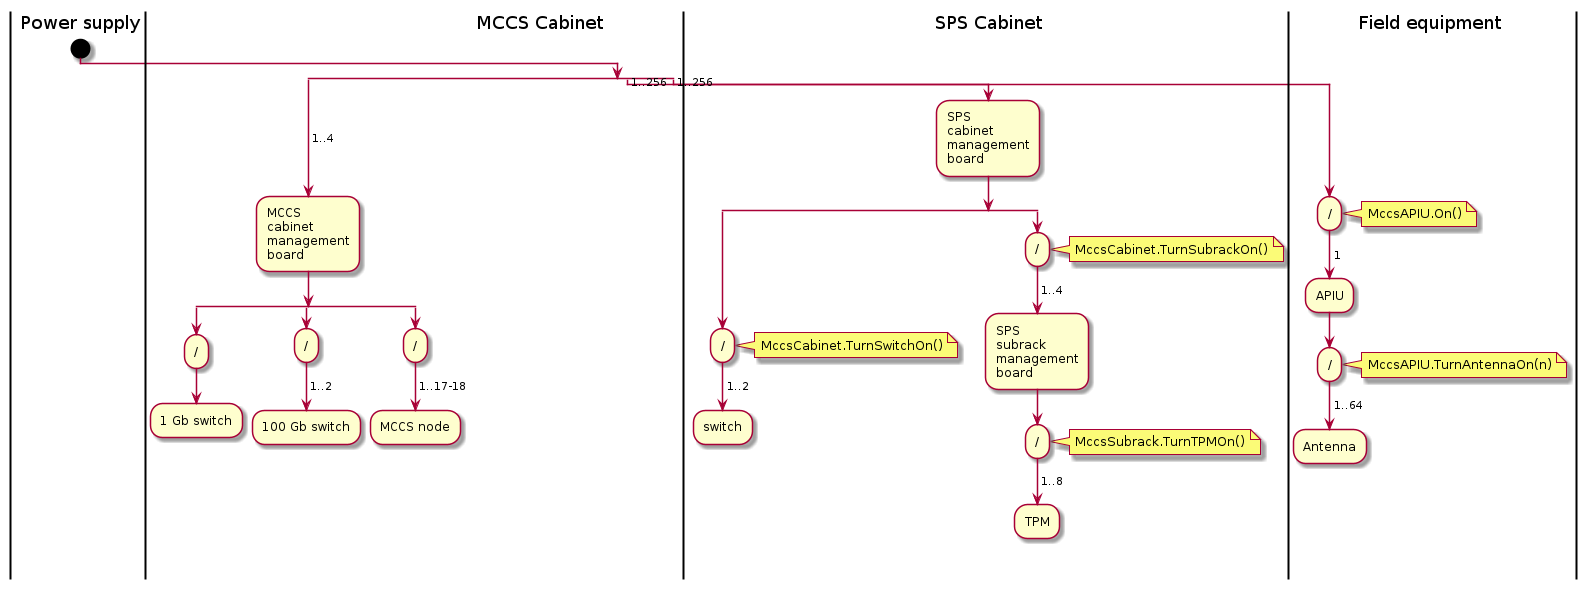 |Power supply|
start
split
-> 1..4;
|MCCS Cabinet|
:MCCS
cabinet
management
board;
split
:/;
:1 Gb switch;
detach
split again
:/;
-> 1..2;
:100 Gb switch;
detach
split again
:/;
-> 1..17-18;
:MCCS node;
detach
end split
split again
|SPS Cabinet|
-> 1..256;
:SPS
cabinet
management
board;
split
:/;
note right
MccsCabinet.TurnSwitchOn()
end note
-> 1..2;
:switch;
detach
split again
:/;
note right
MccsCabinet.TurnSubrackOn()
end note
-> 1..4;
:SPS
subrack
management
board;
:/;
note right
MccsSubrack.TurnTPMOn()
end note
-> 1..8;
:TPM;
end split
detach
split again
|Field equipment|
-> 1..256;
:/;
note right
MccsAPIU.On()
end note
-> 1;
:APIU;
:/;
note right
MccsAPIU.TurnAntennaOn(n)
end note
-> 1..64;
:Antenna;
detach
end split
